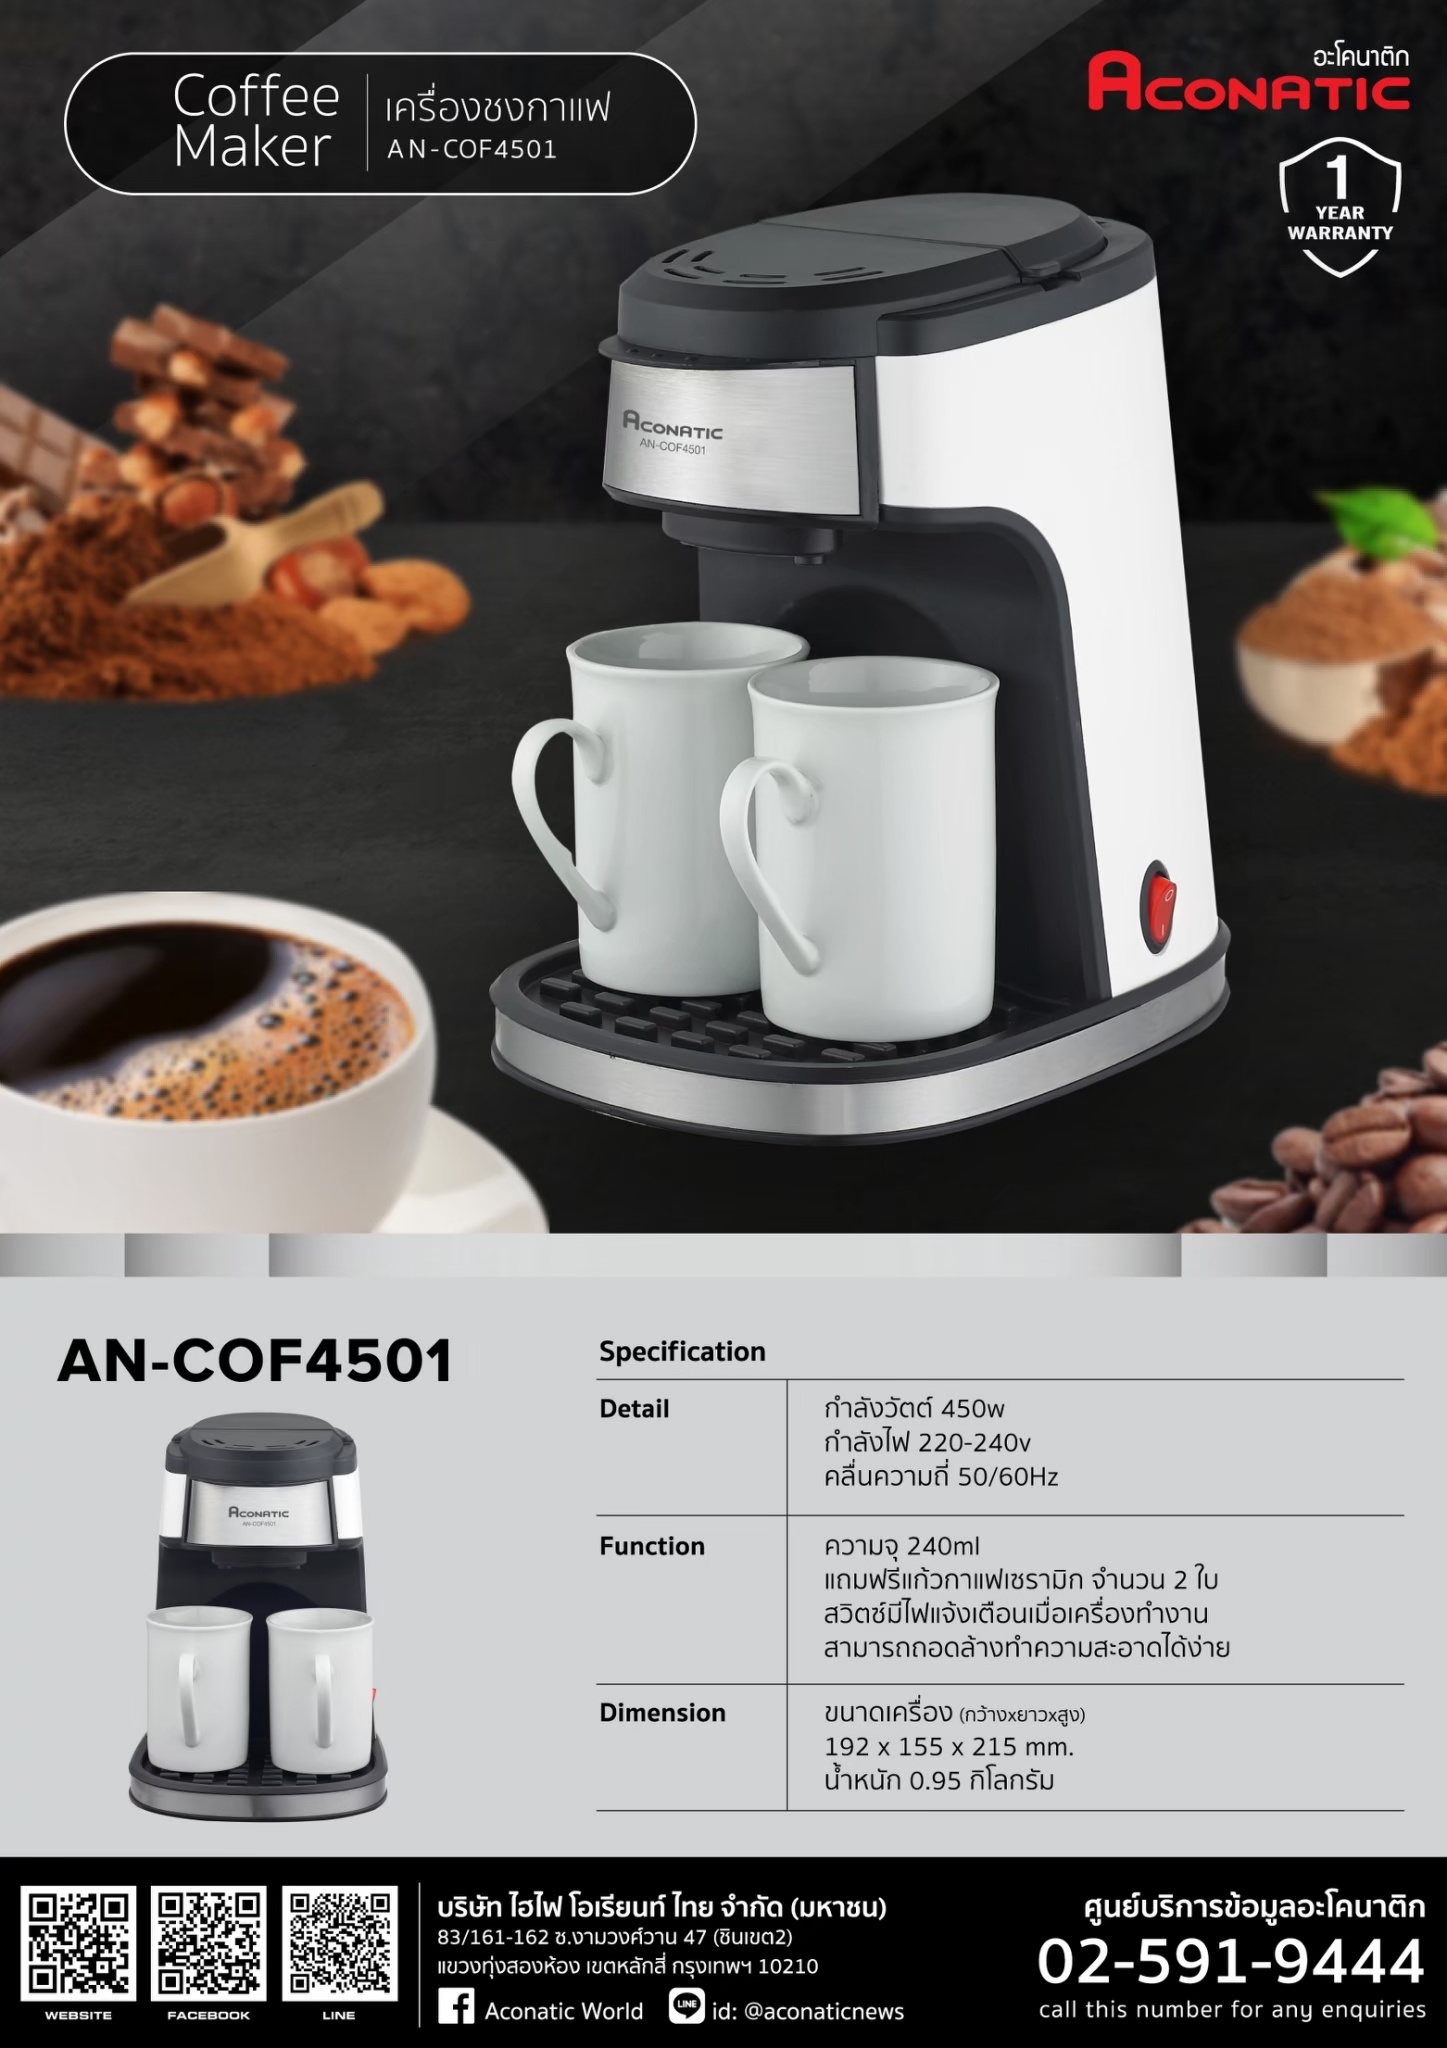 Coffee Maker model AN-COF4501